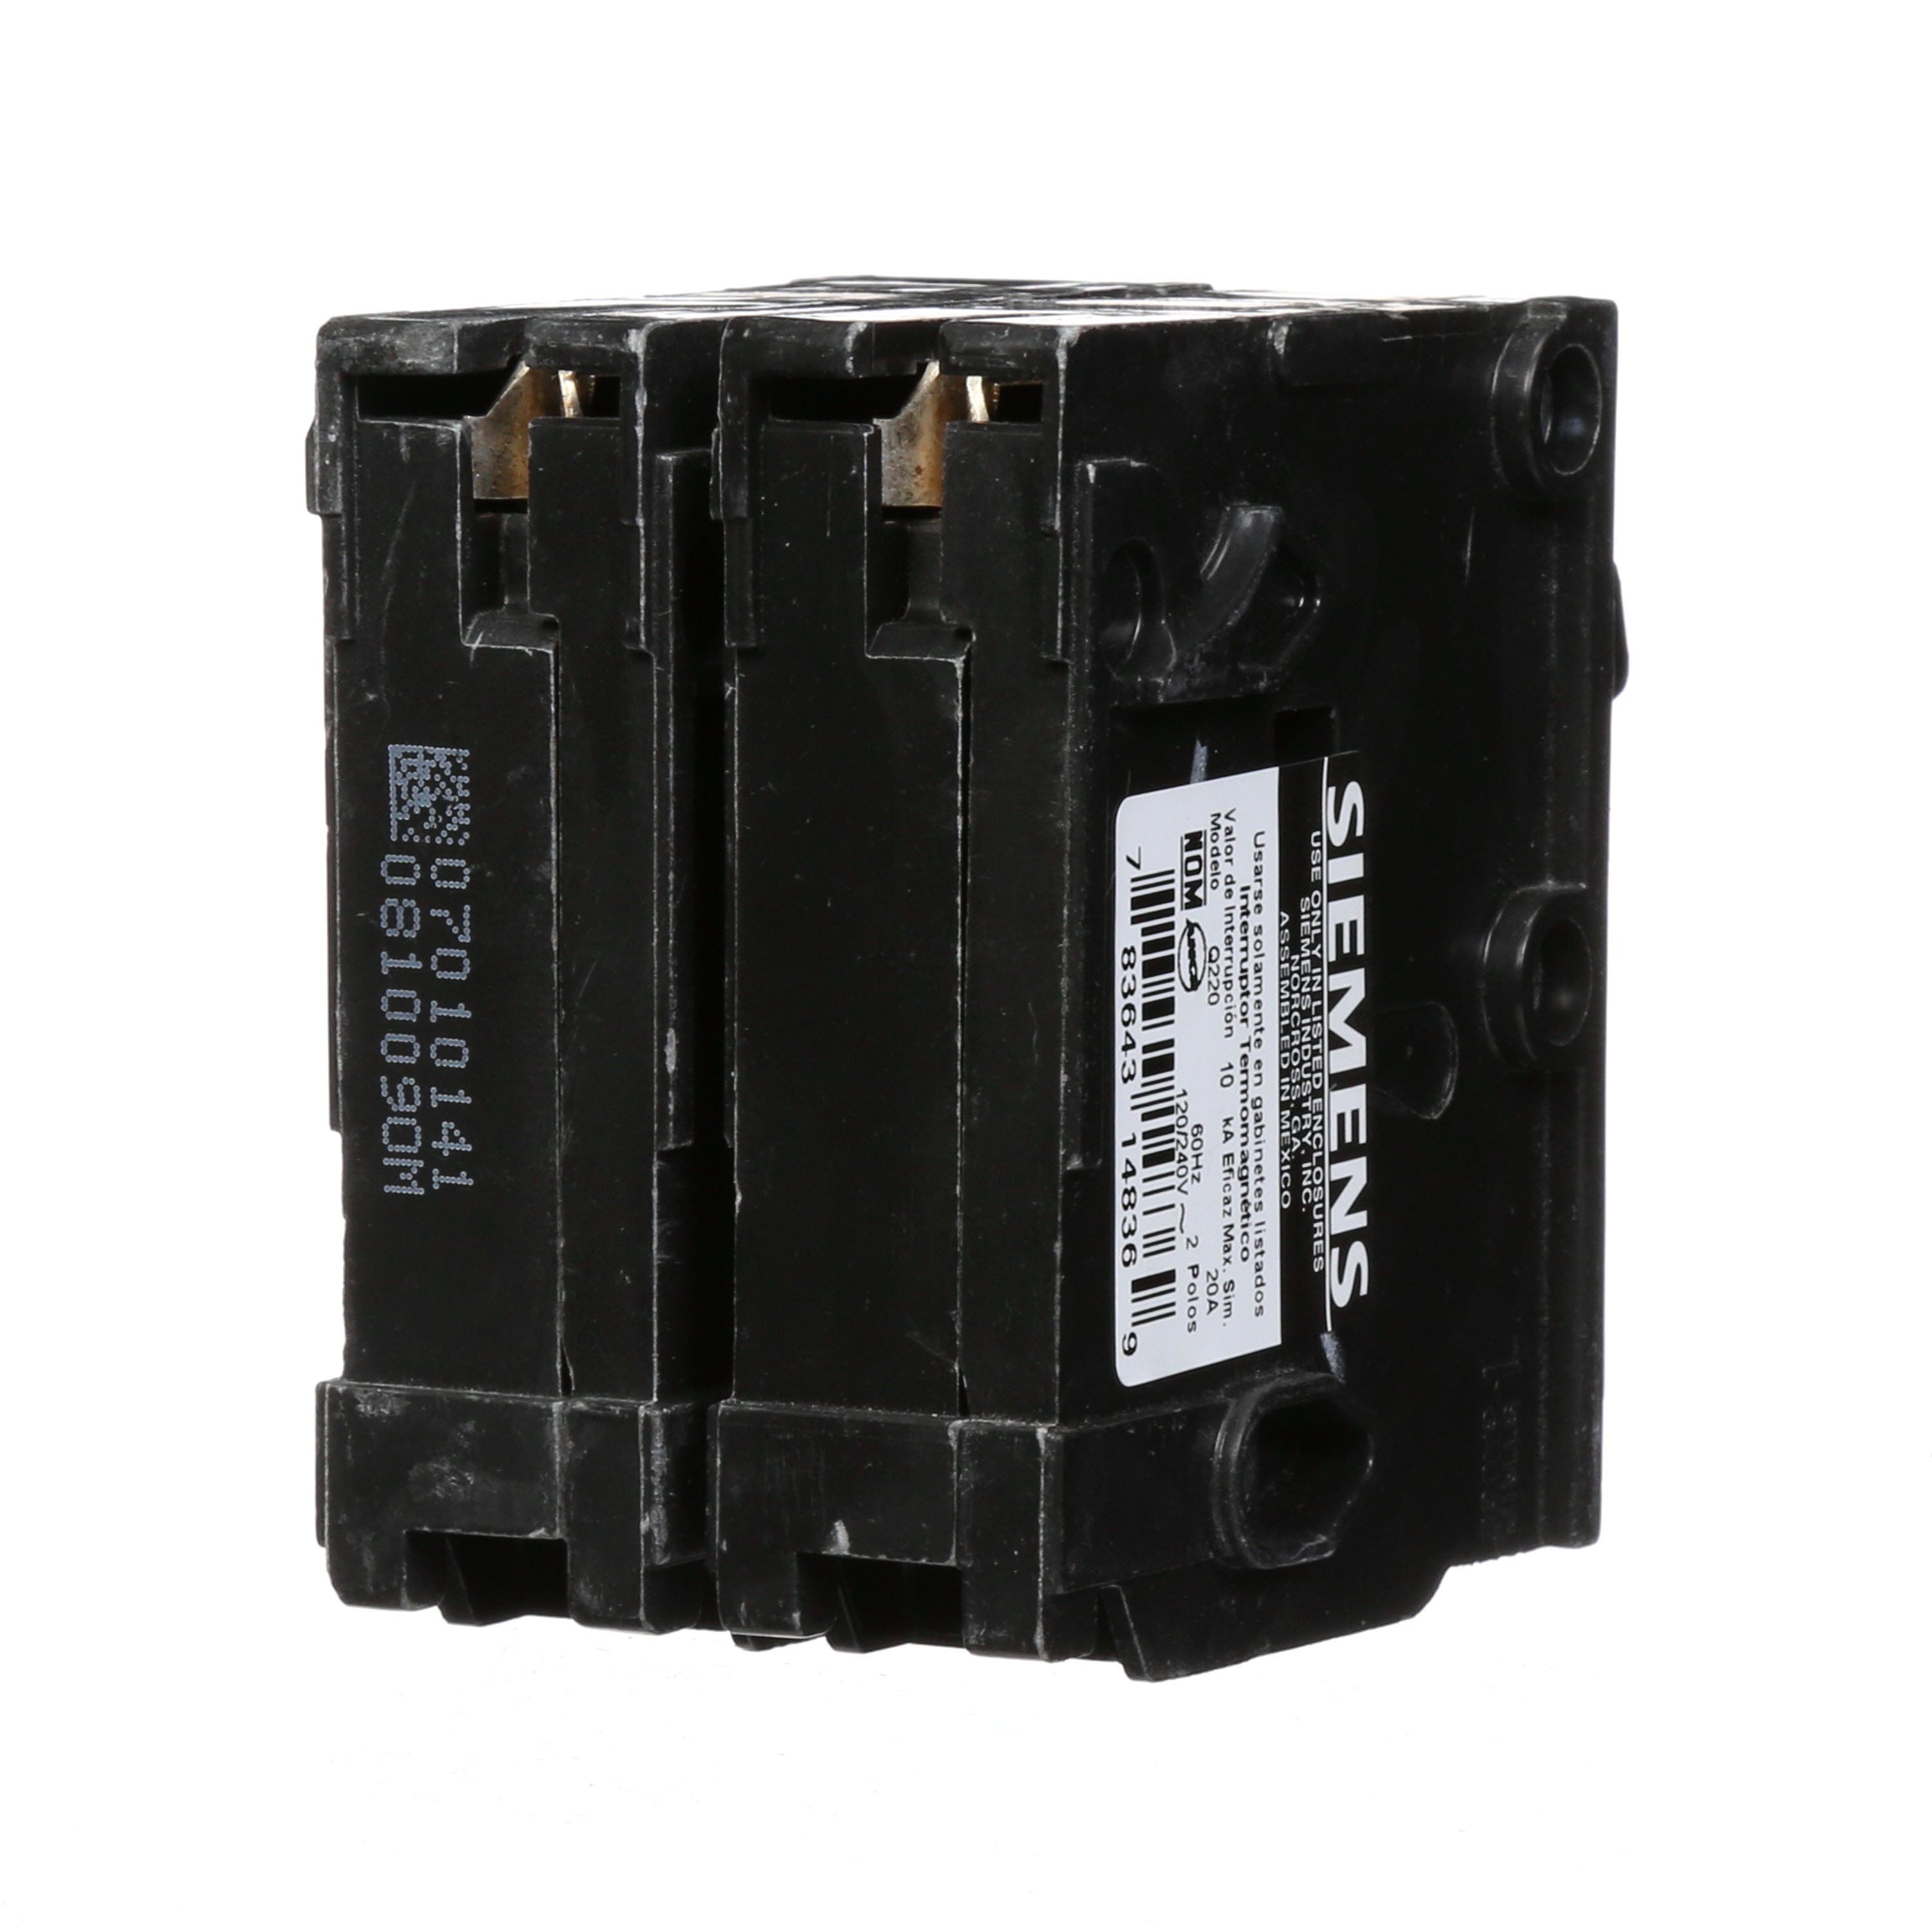 Siemens Q220 Circuit Breaker 2 Pole 20 Amp G14 for sale online 